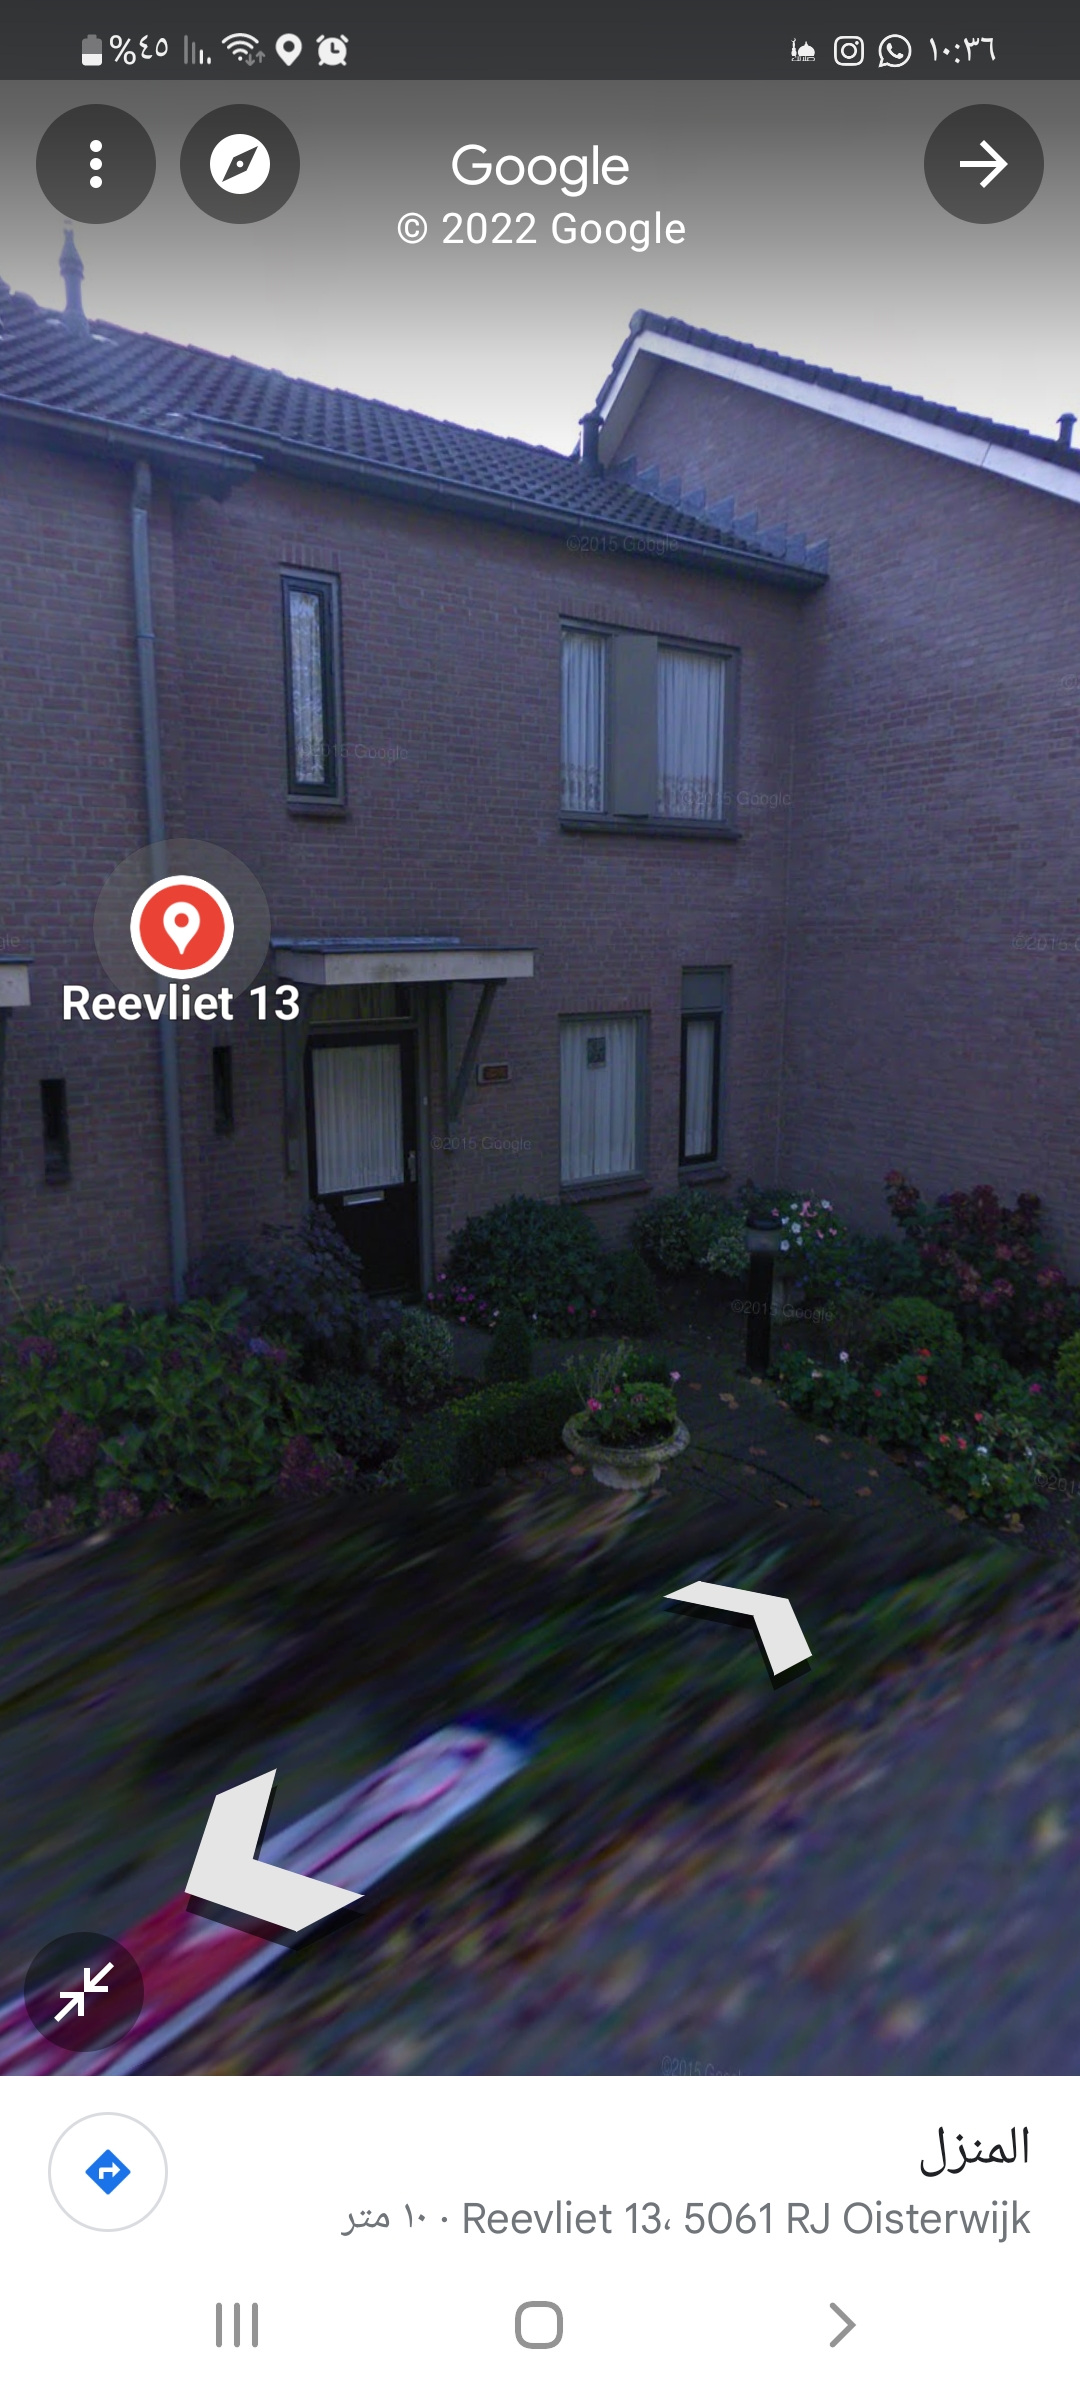 Reevliet 13, 5061 RJ Oisterwijk, Nederland